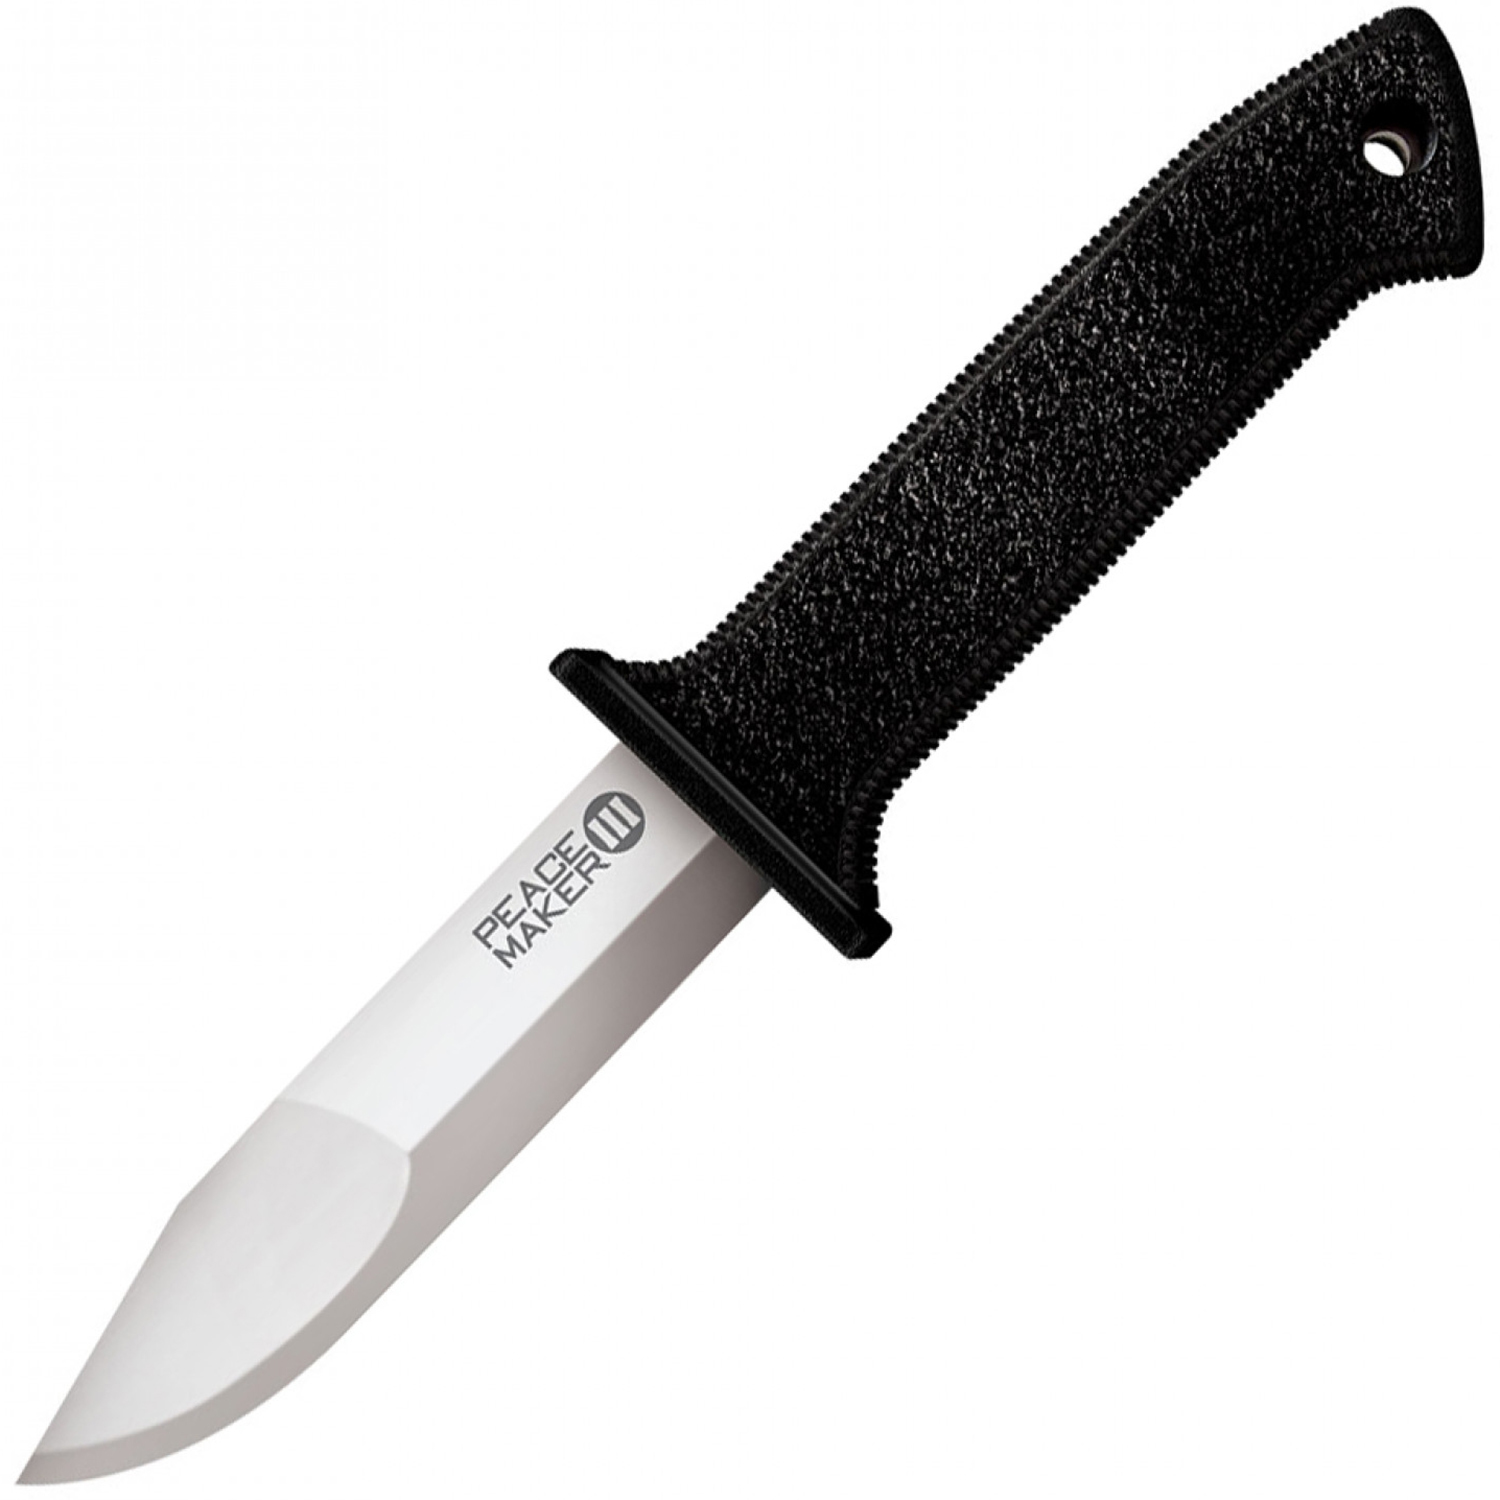 Нож Cold Steel Peace Maker III 20PBS, сталь 4116, рукоять резина нож cold steel finn bear 20pc сталь 4116 рукоять полипропилен